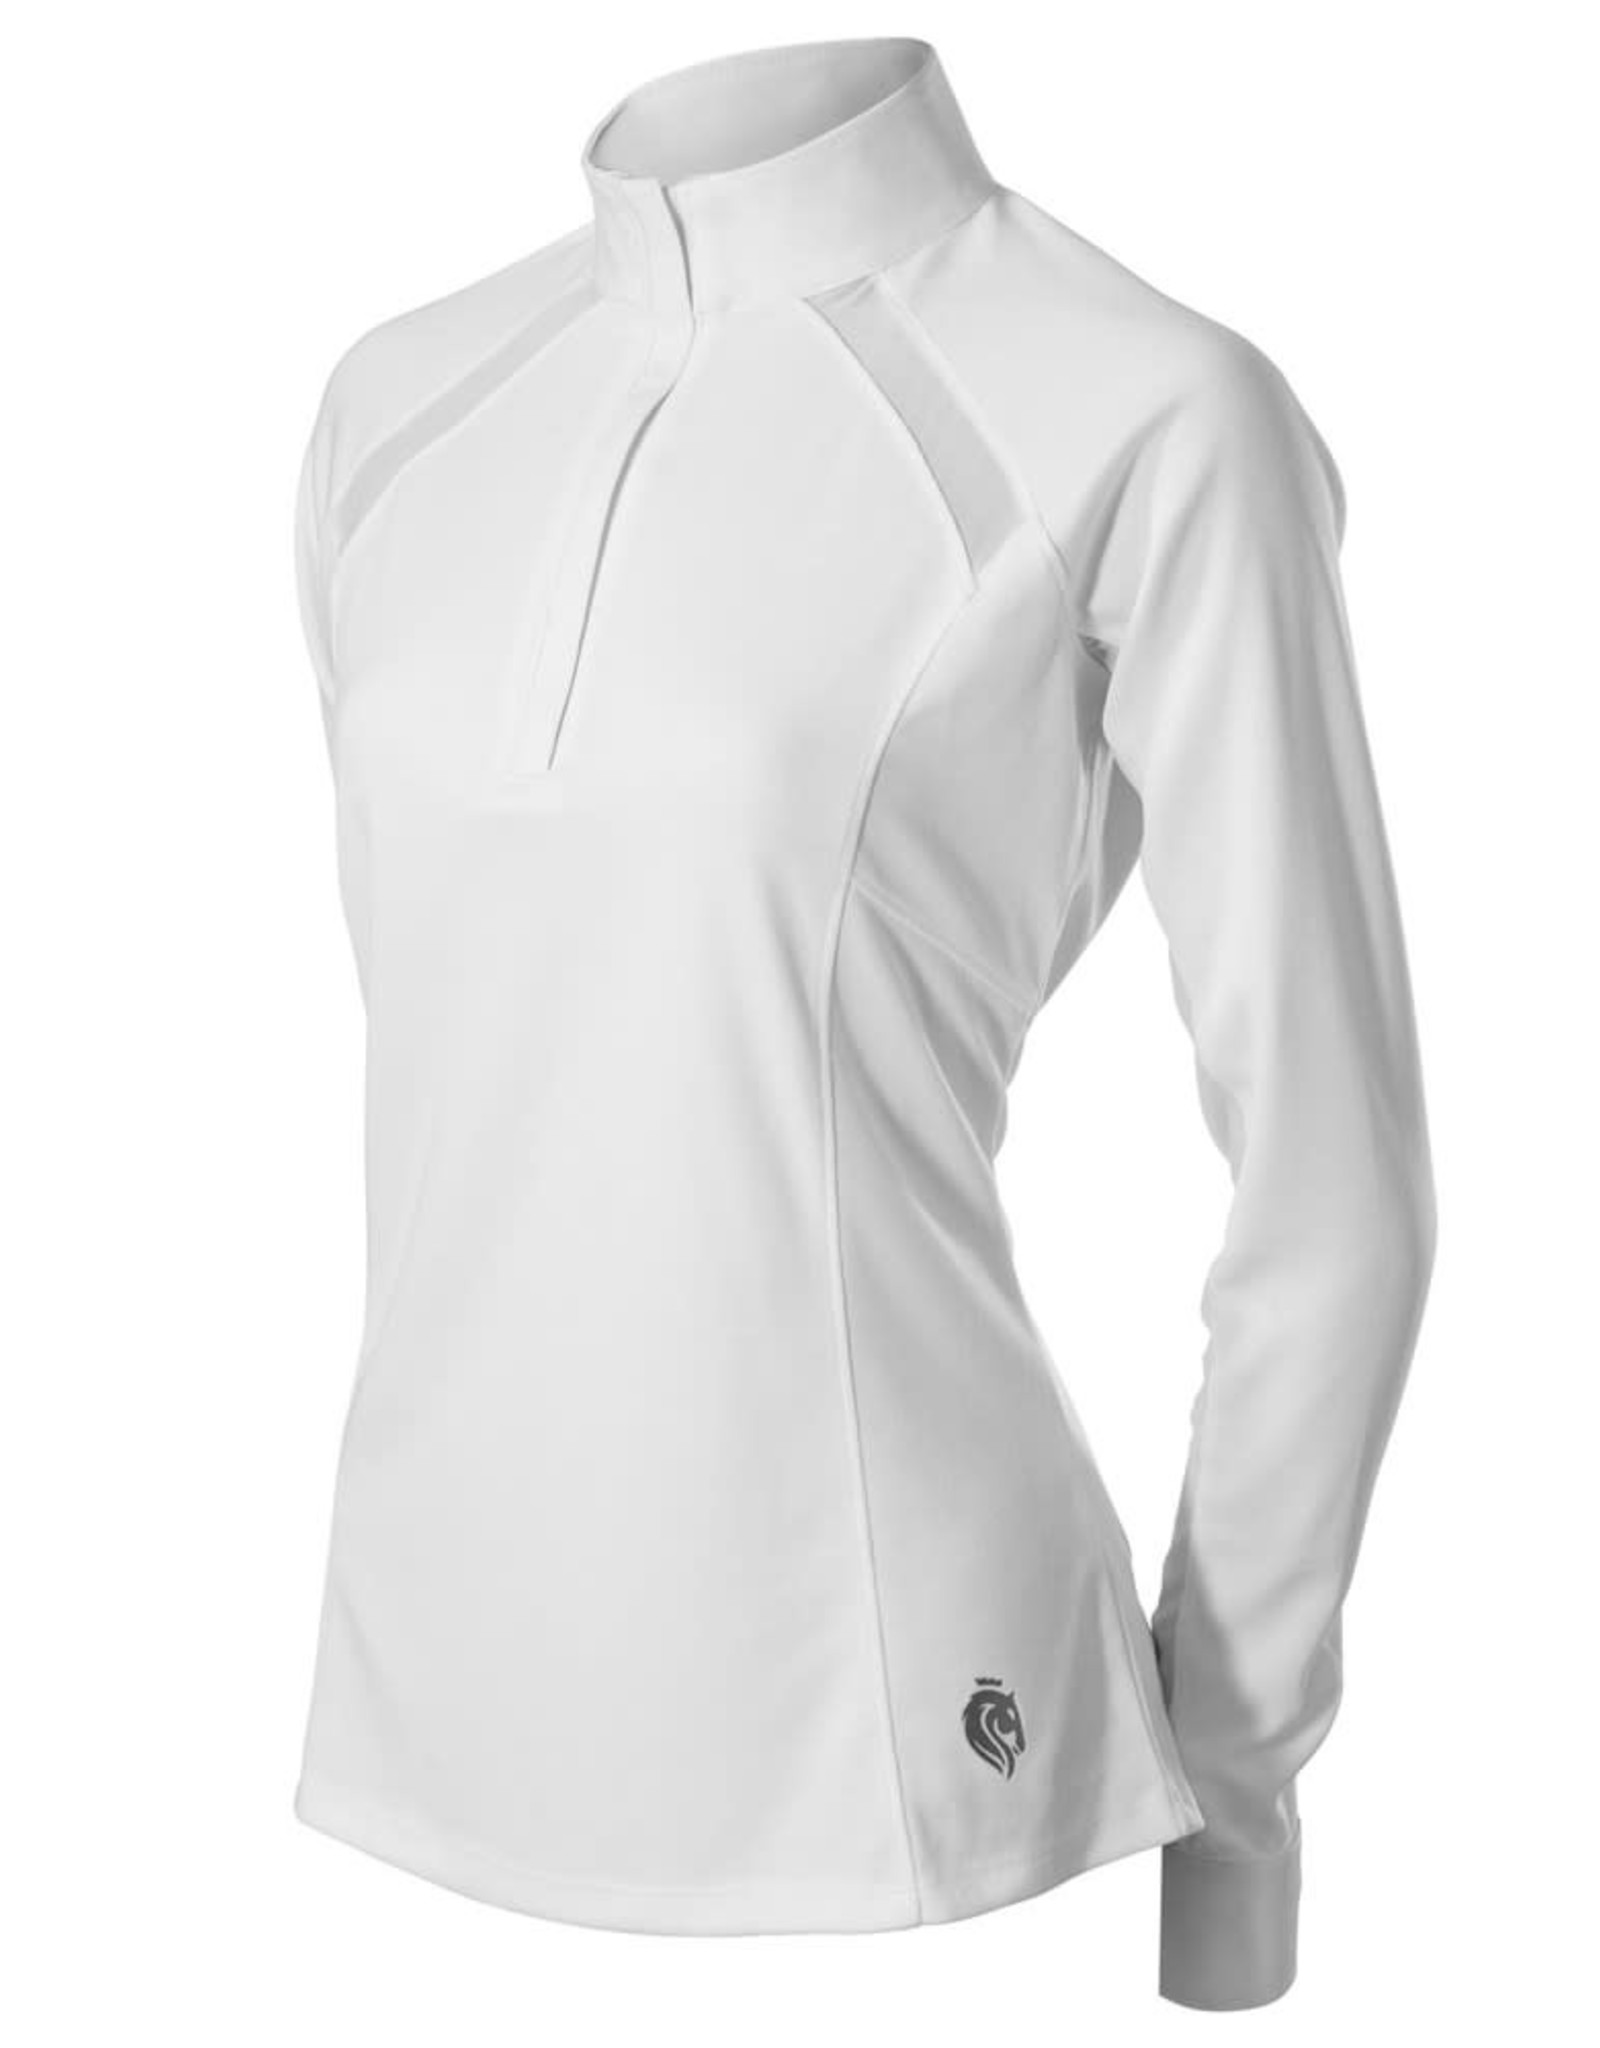 EQUINAVIA Ingrid Womens Long Sleeved Show Shirt - White